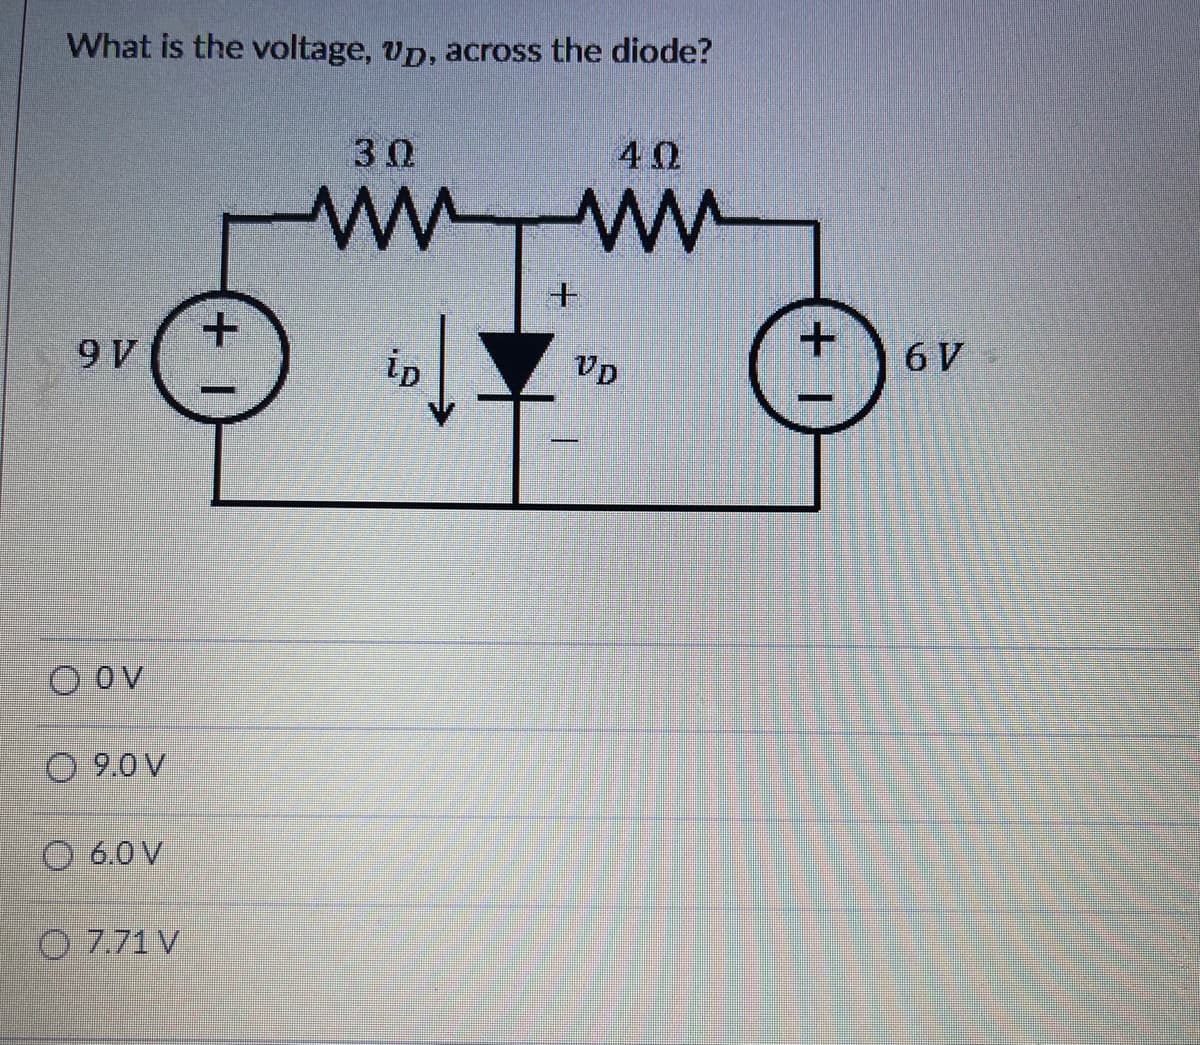 What is the voltage, vp, across the diode?
30
40
9 V
ip
Vp
6 V
O Ov
O 9.0V
O 6.0 V
O 7.71 V
